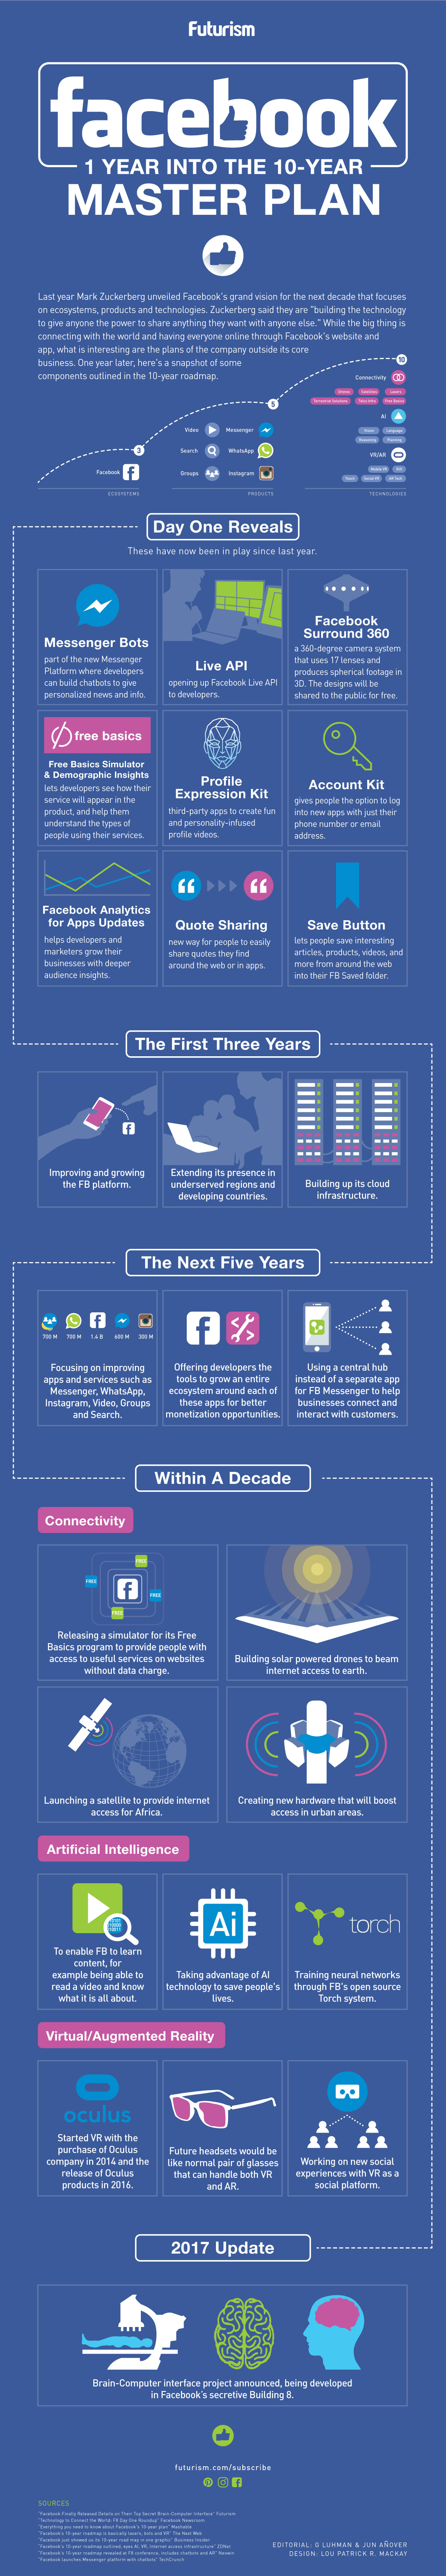 The Progress of Facebook's 10-Year Masterplan